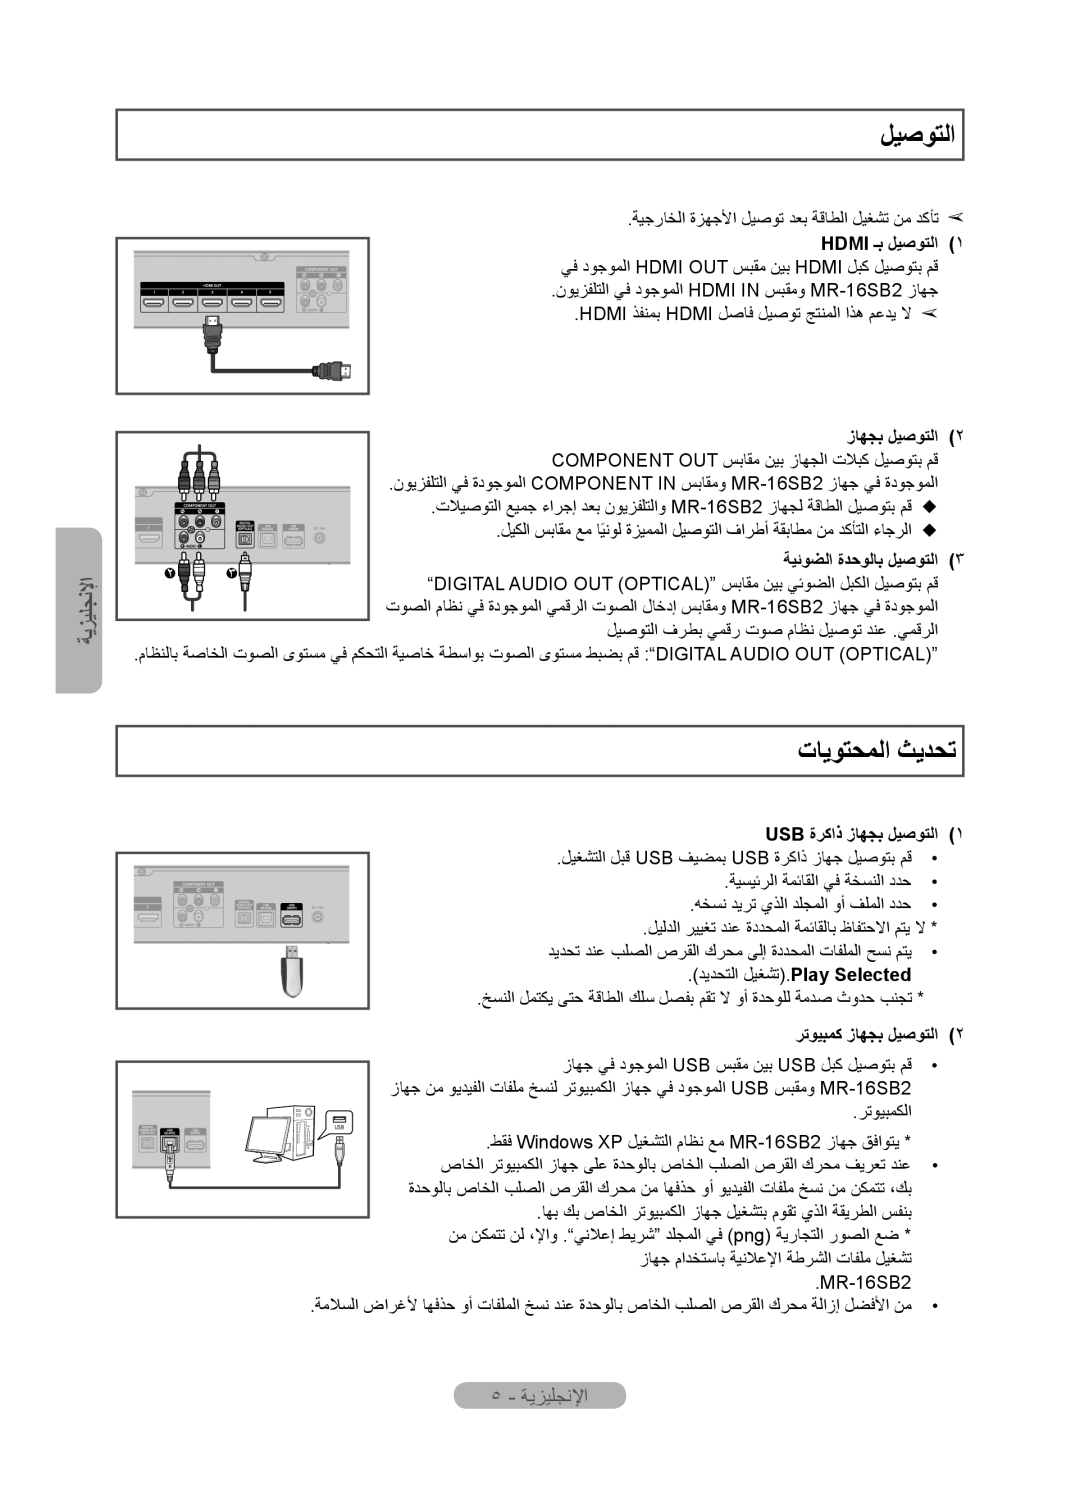 Samsung MR-16SB2 manual ﺕﺎﻳﻮﺘﺤﻤﻟﺍ ﺚﻳﺪﺤﺗ, ٥ - ﺔﻳﺰﻴﻠﺠﻧﻹﺍ, Hdmi ـﺑ ﻞﻴﺻﻮﺘﻟﺍ, Hdmi ﺬﻔﻨﻤﺑ Hdmi ﻞﺻﺎﻓ ﻞﻴﺻﻮﺗ ﺞﺘﻨﻤﻟﺍ ﺍﺬﻫ ﻢﻋﺪﻳ ﻻ 